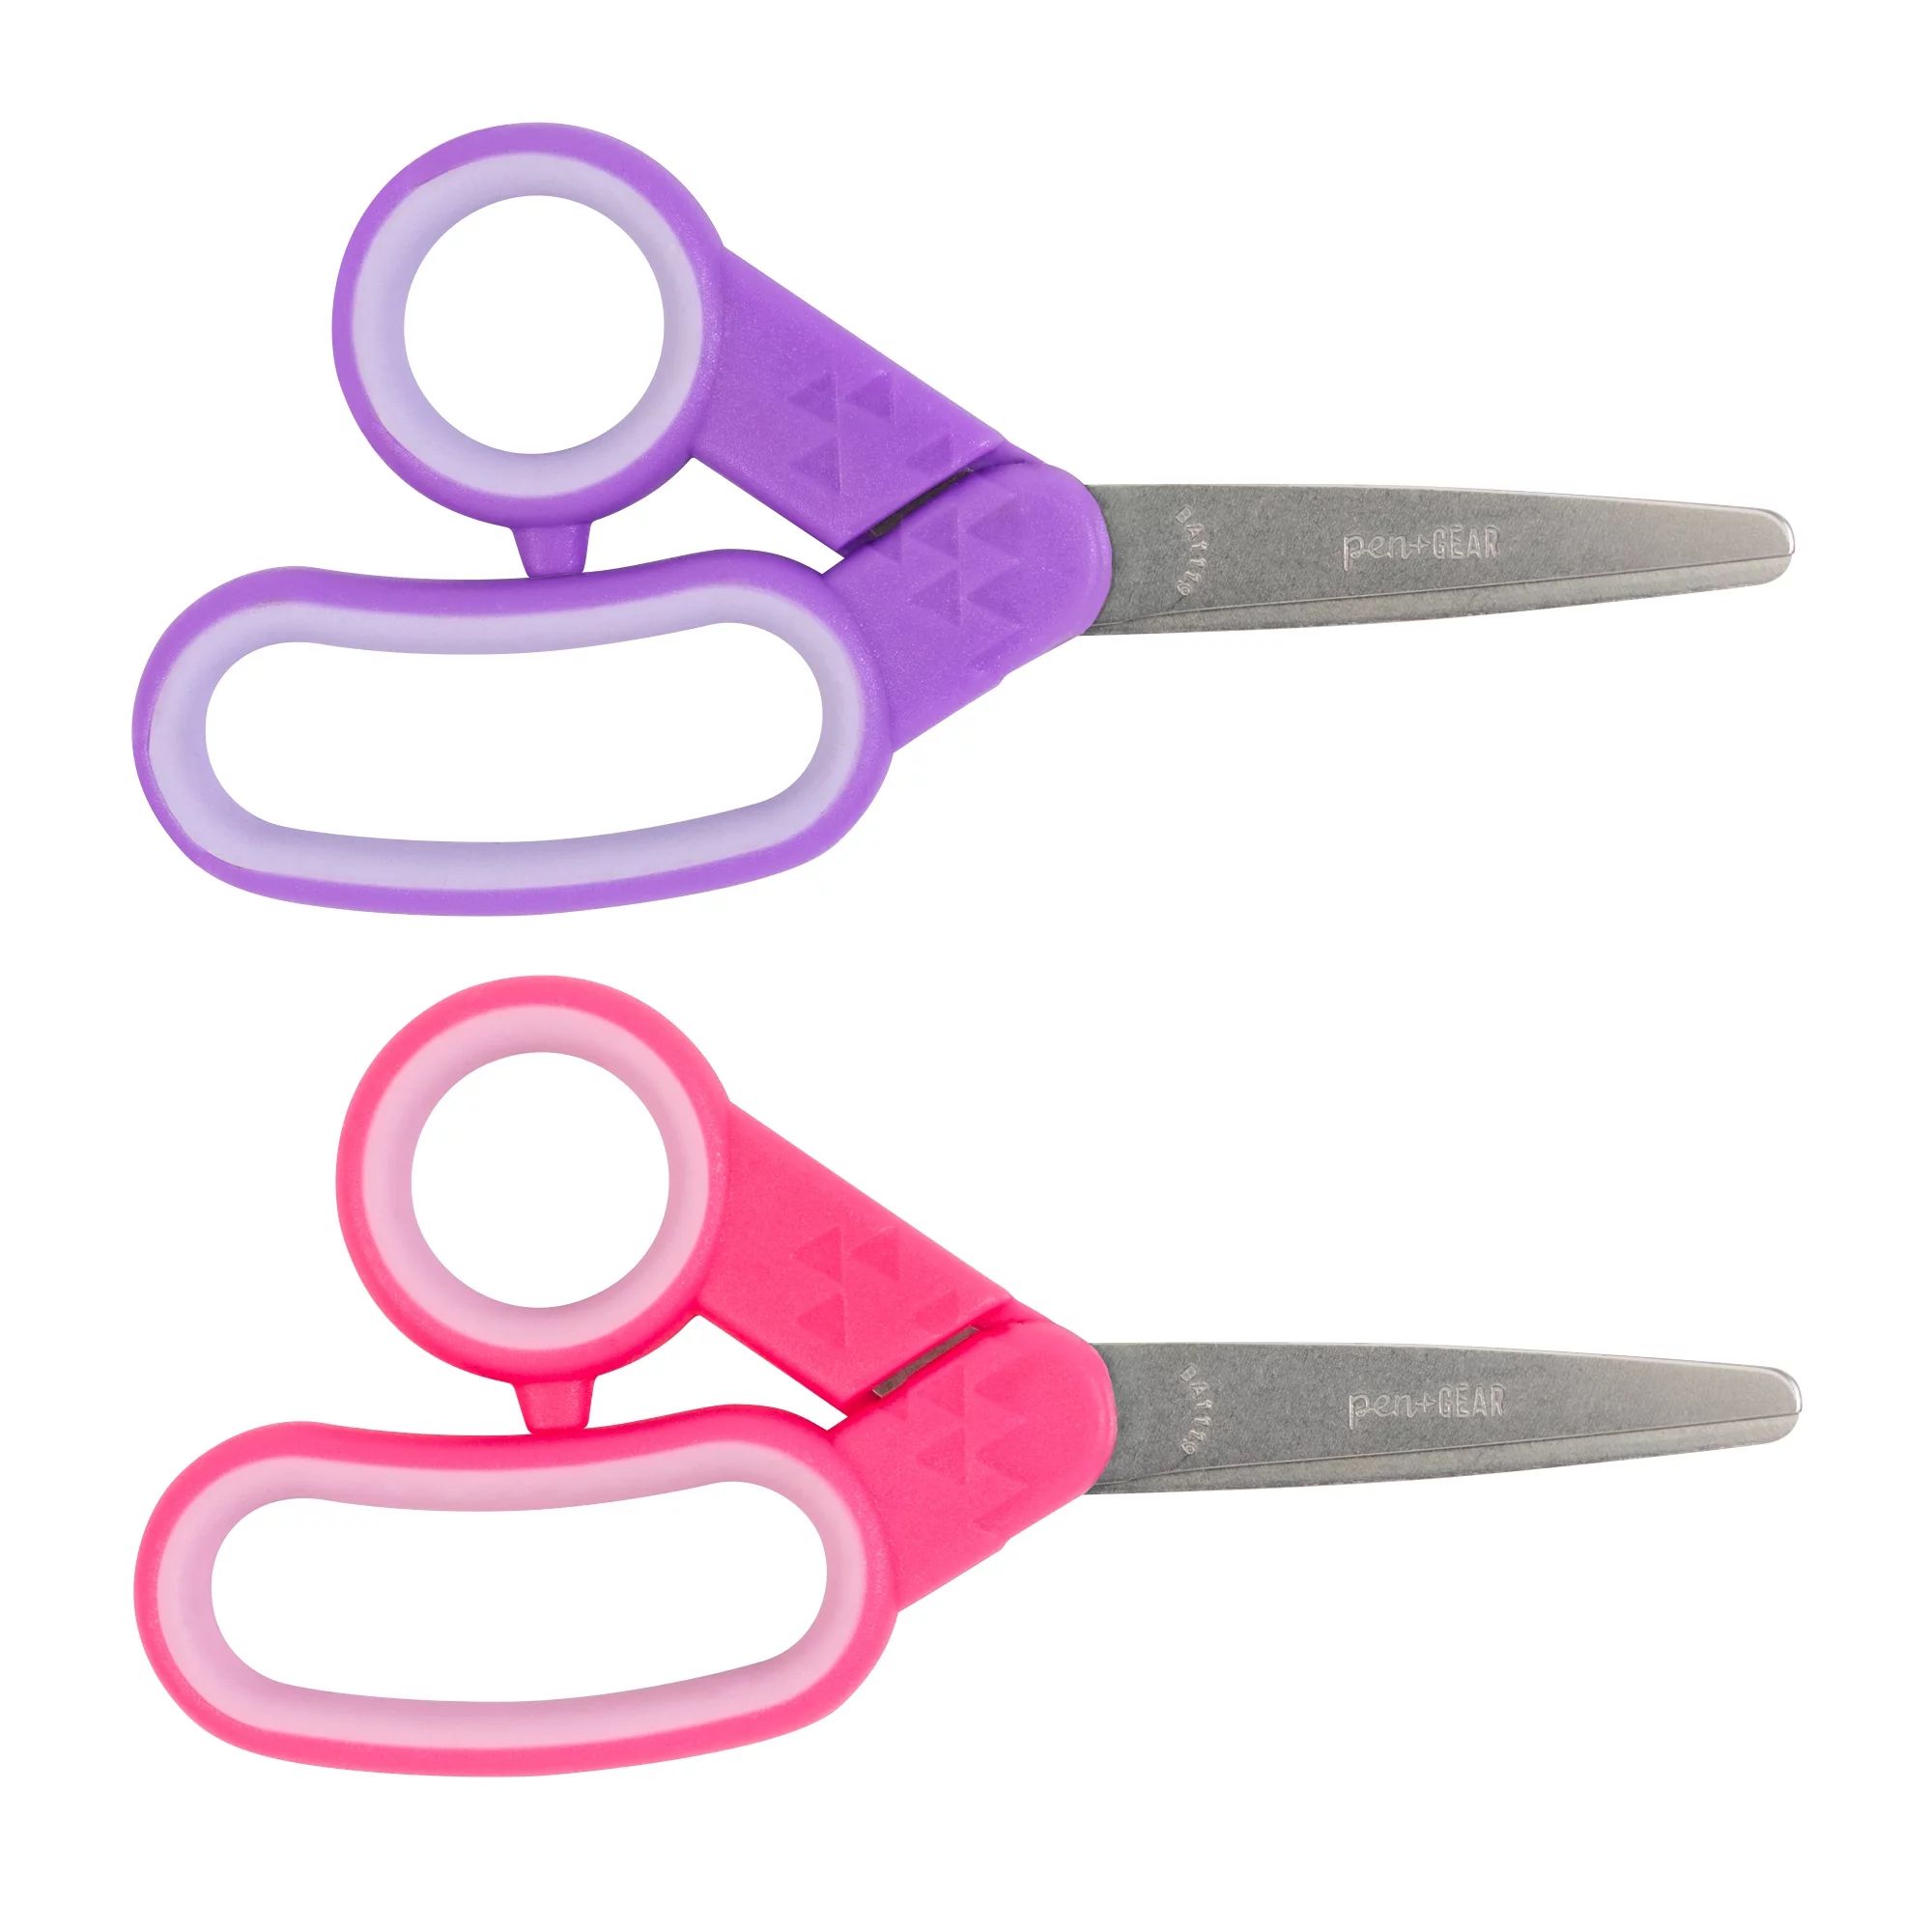 Pen+Gear 5 Inch Blunt Scissors 2 Pack, Pink and Purple | Walmart (US)